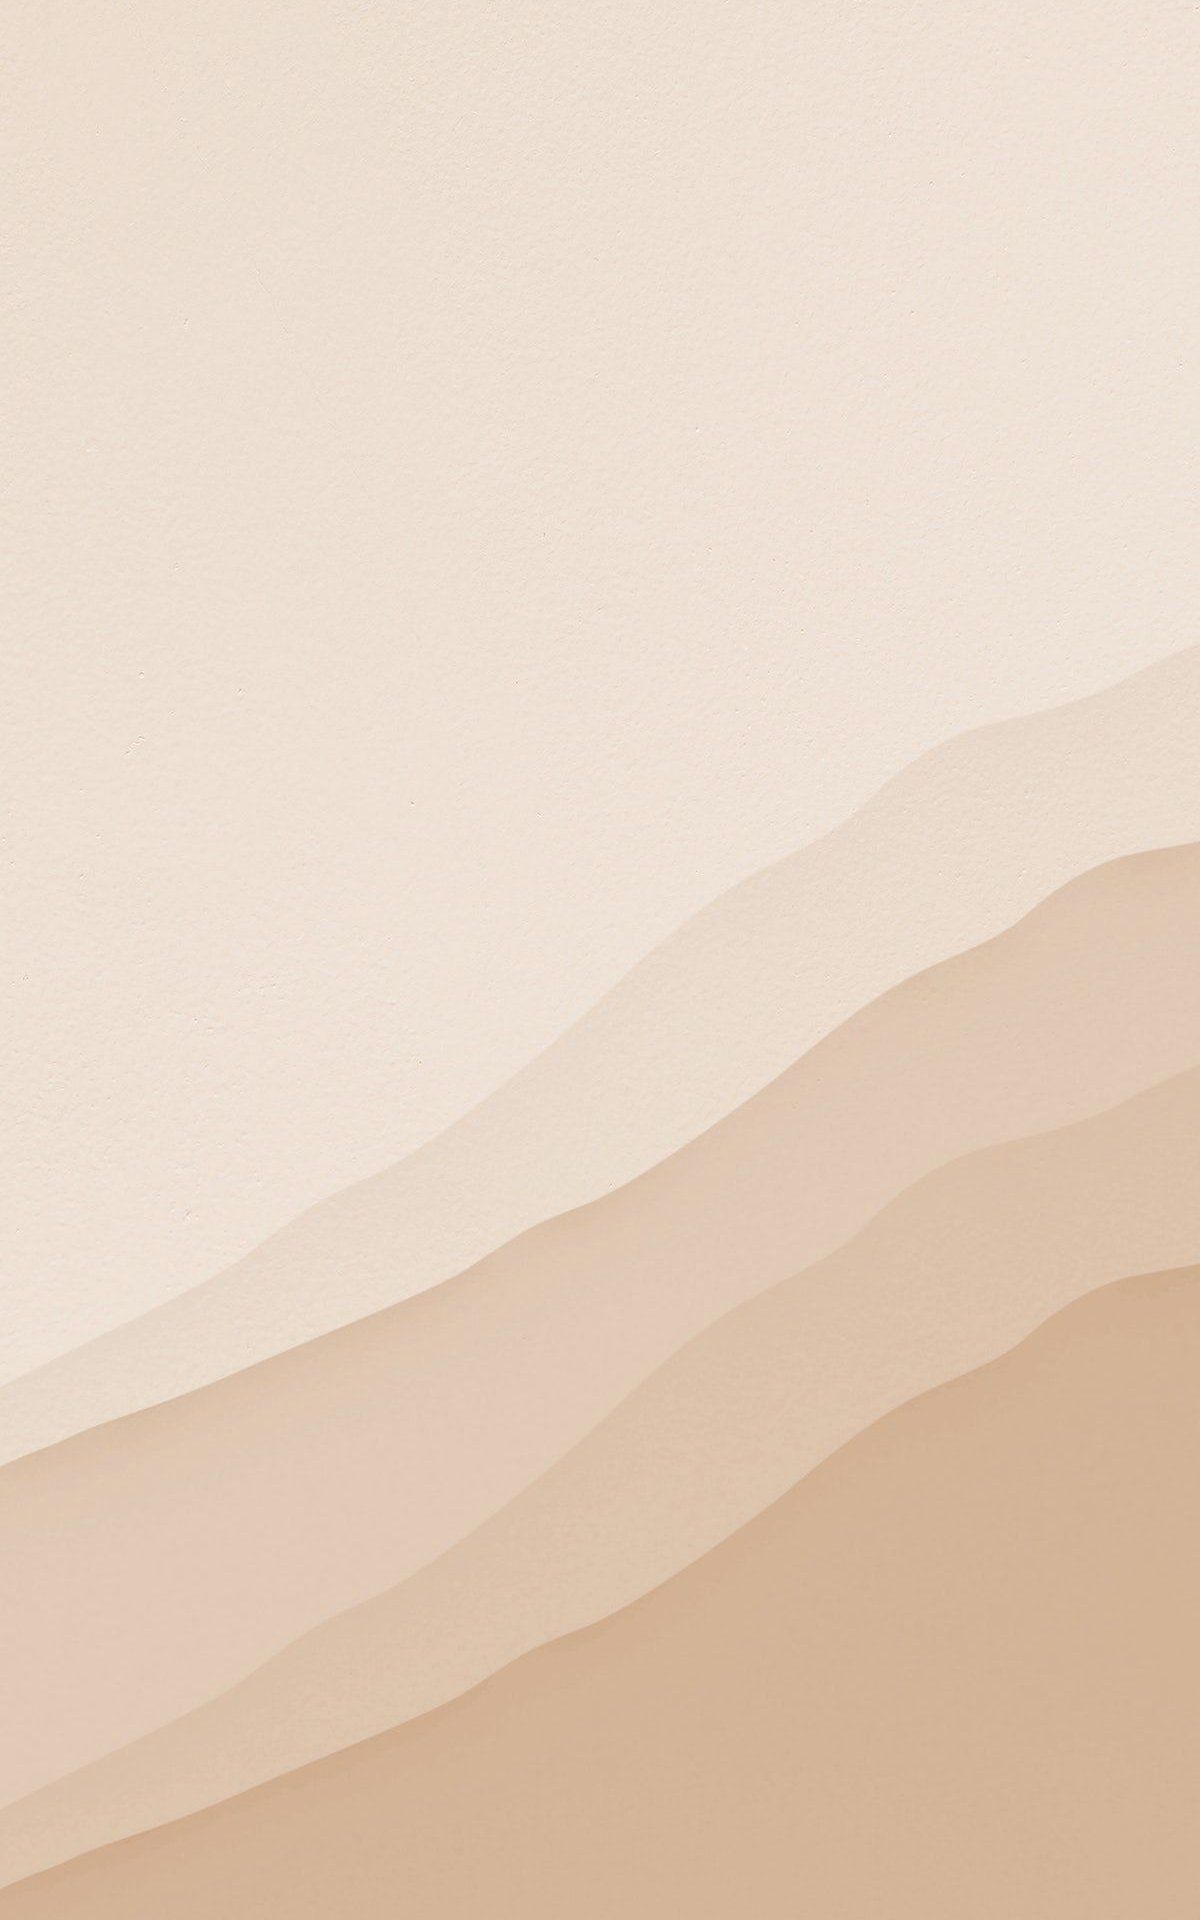 IPhone wallpaper with a minimalist desert design - IPad